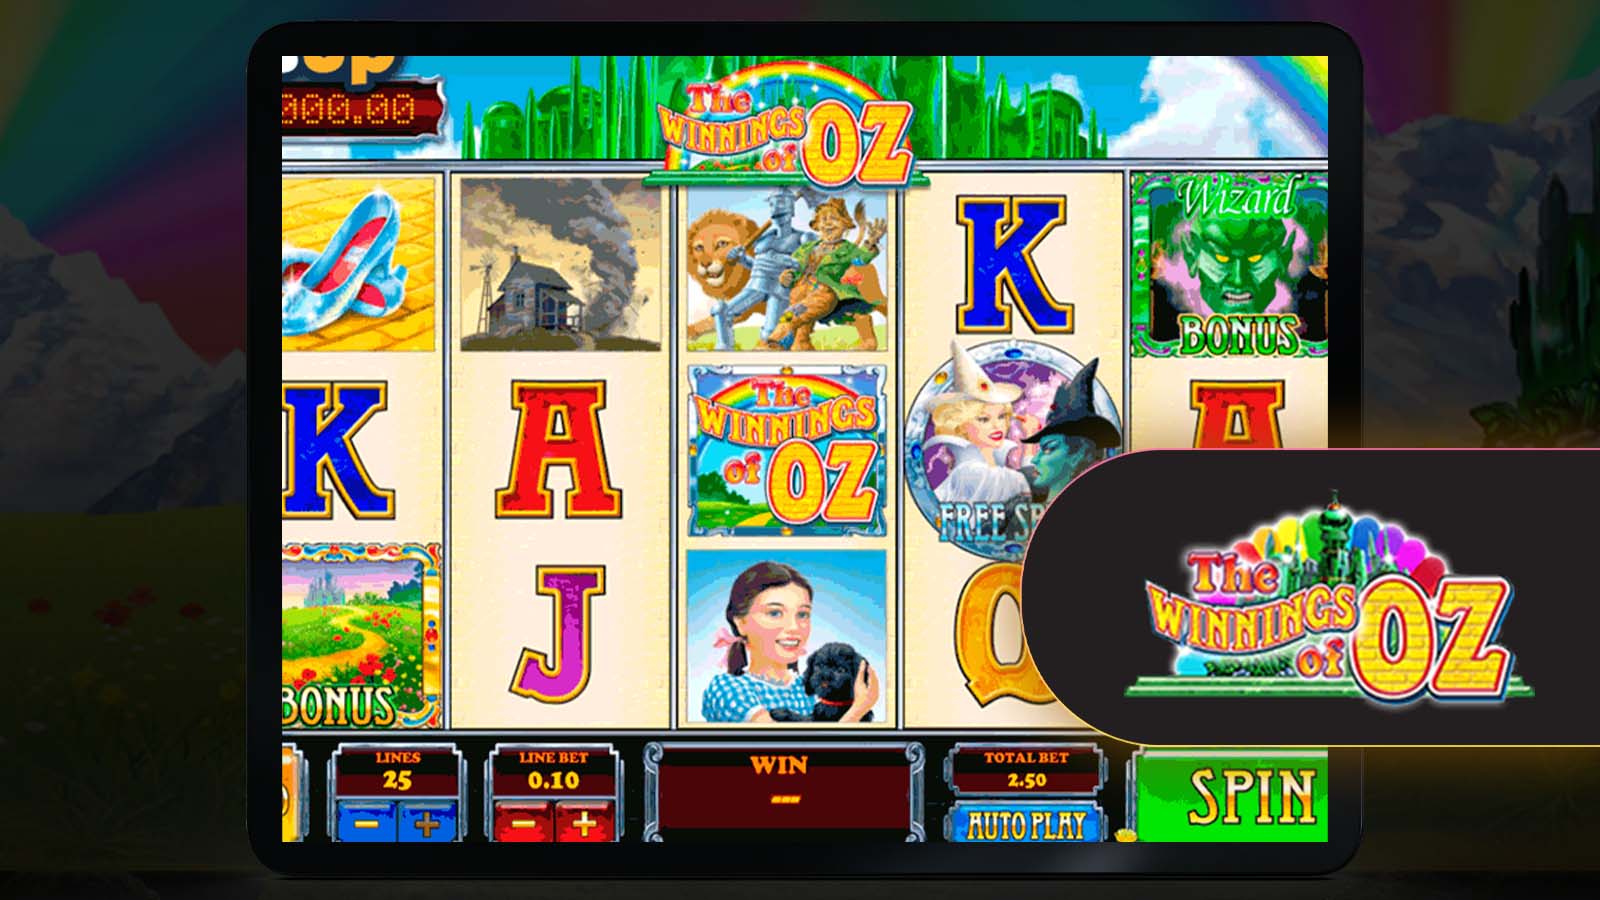 The Winnings of Oz in online casinos